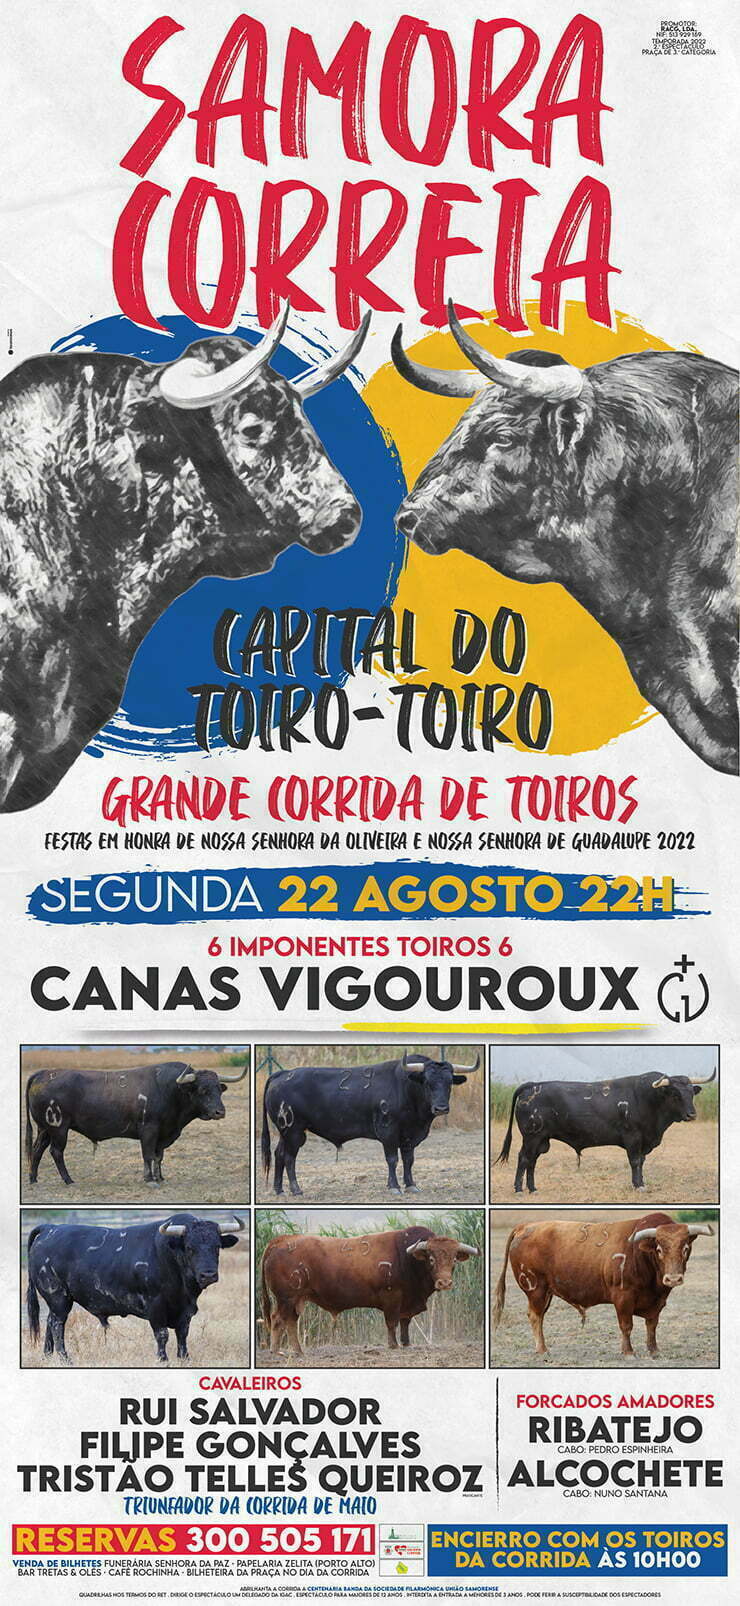 Samora Correia – Capital do Toiro-Toiro